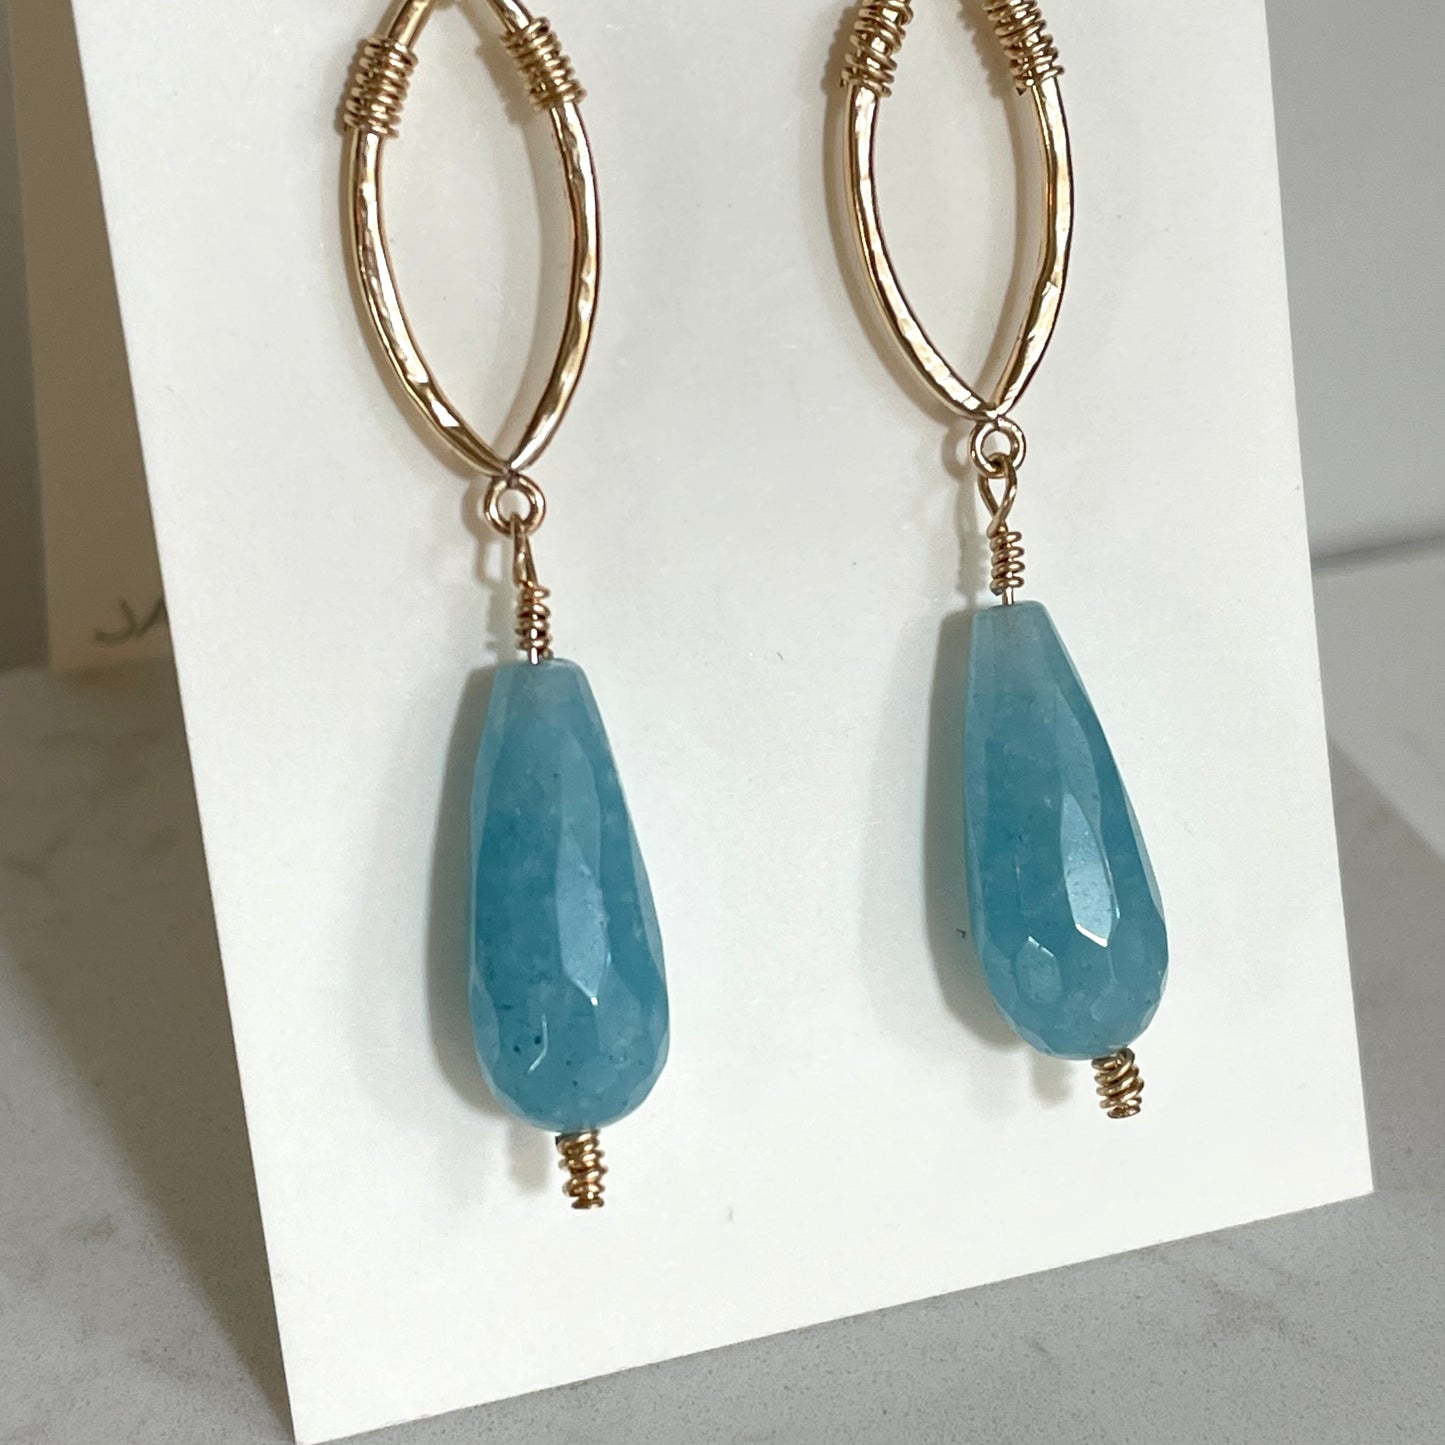 Blue Quartz Earrings